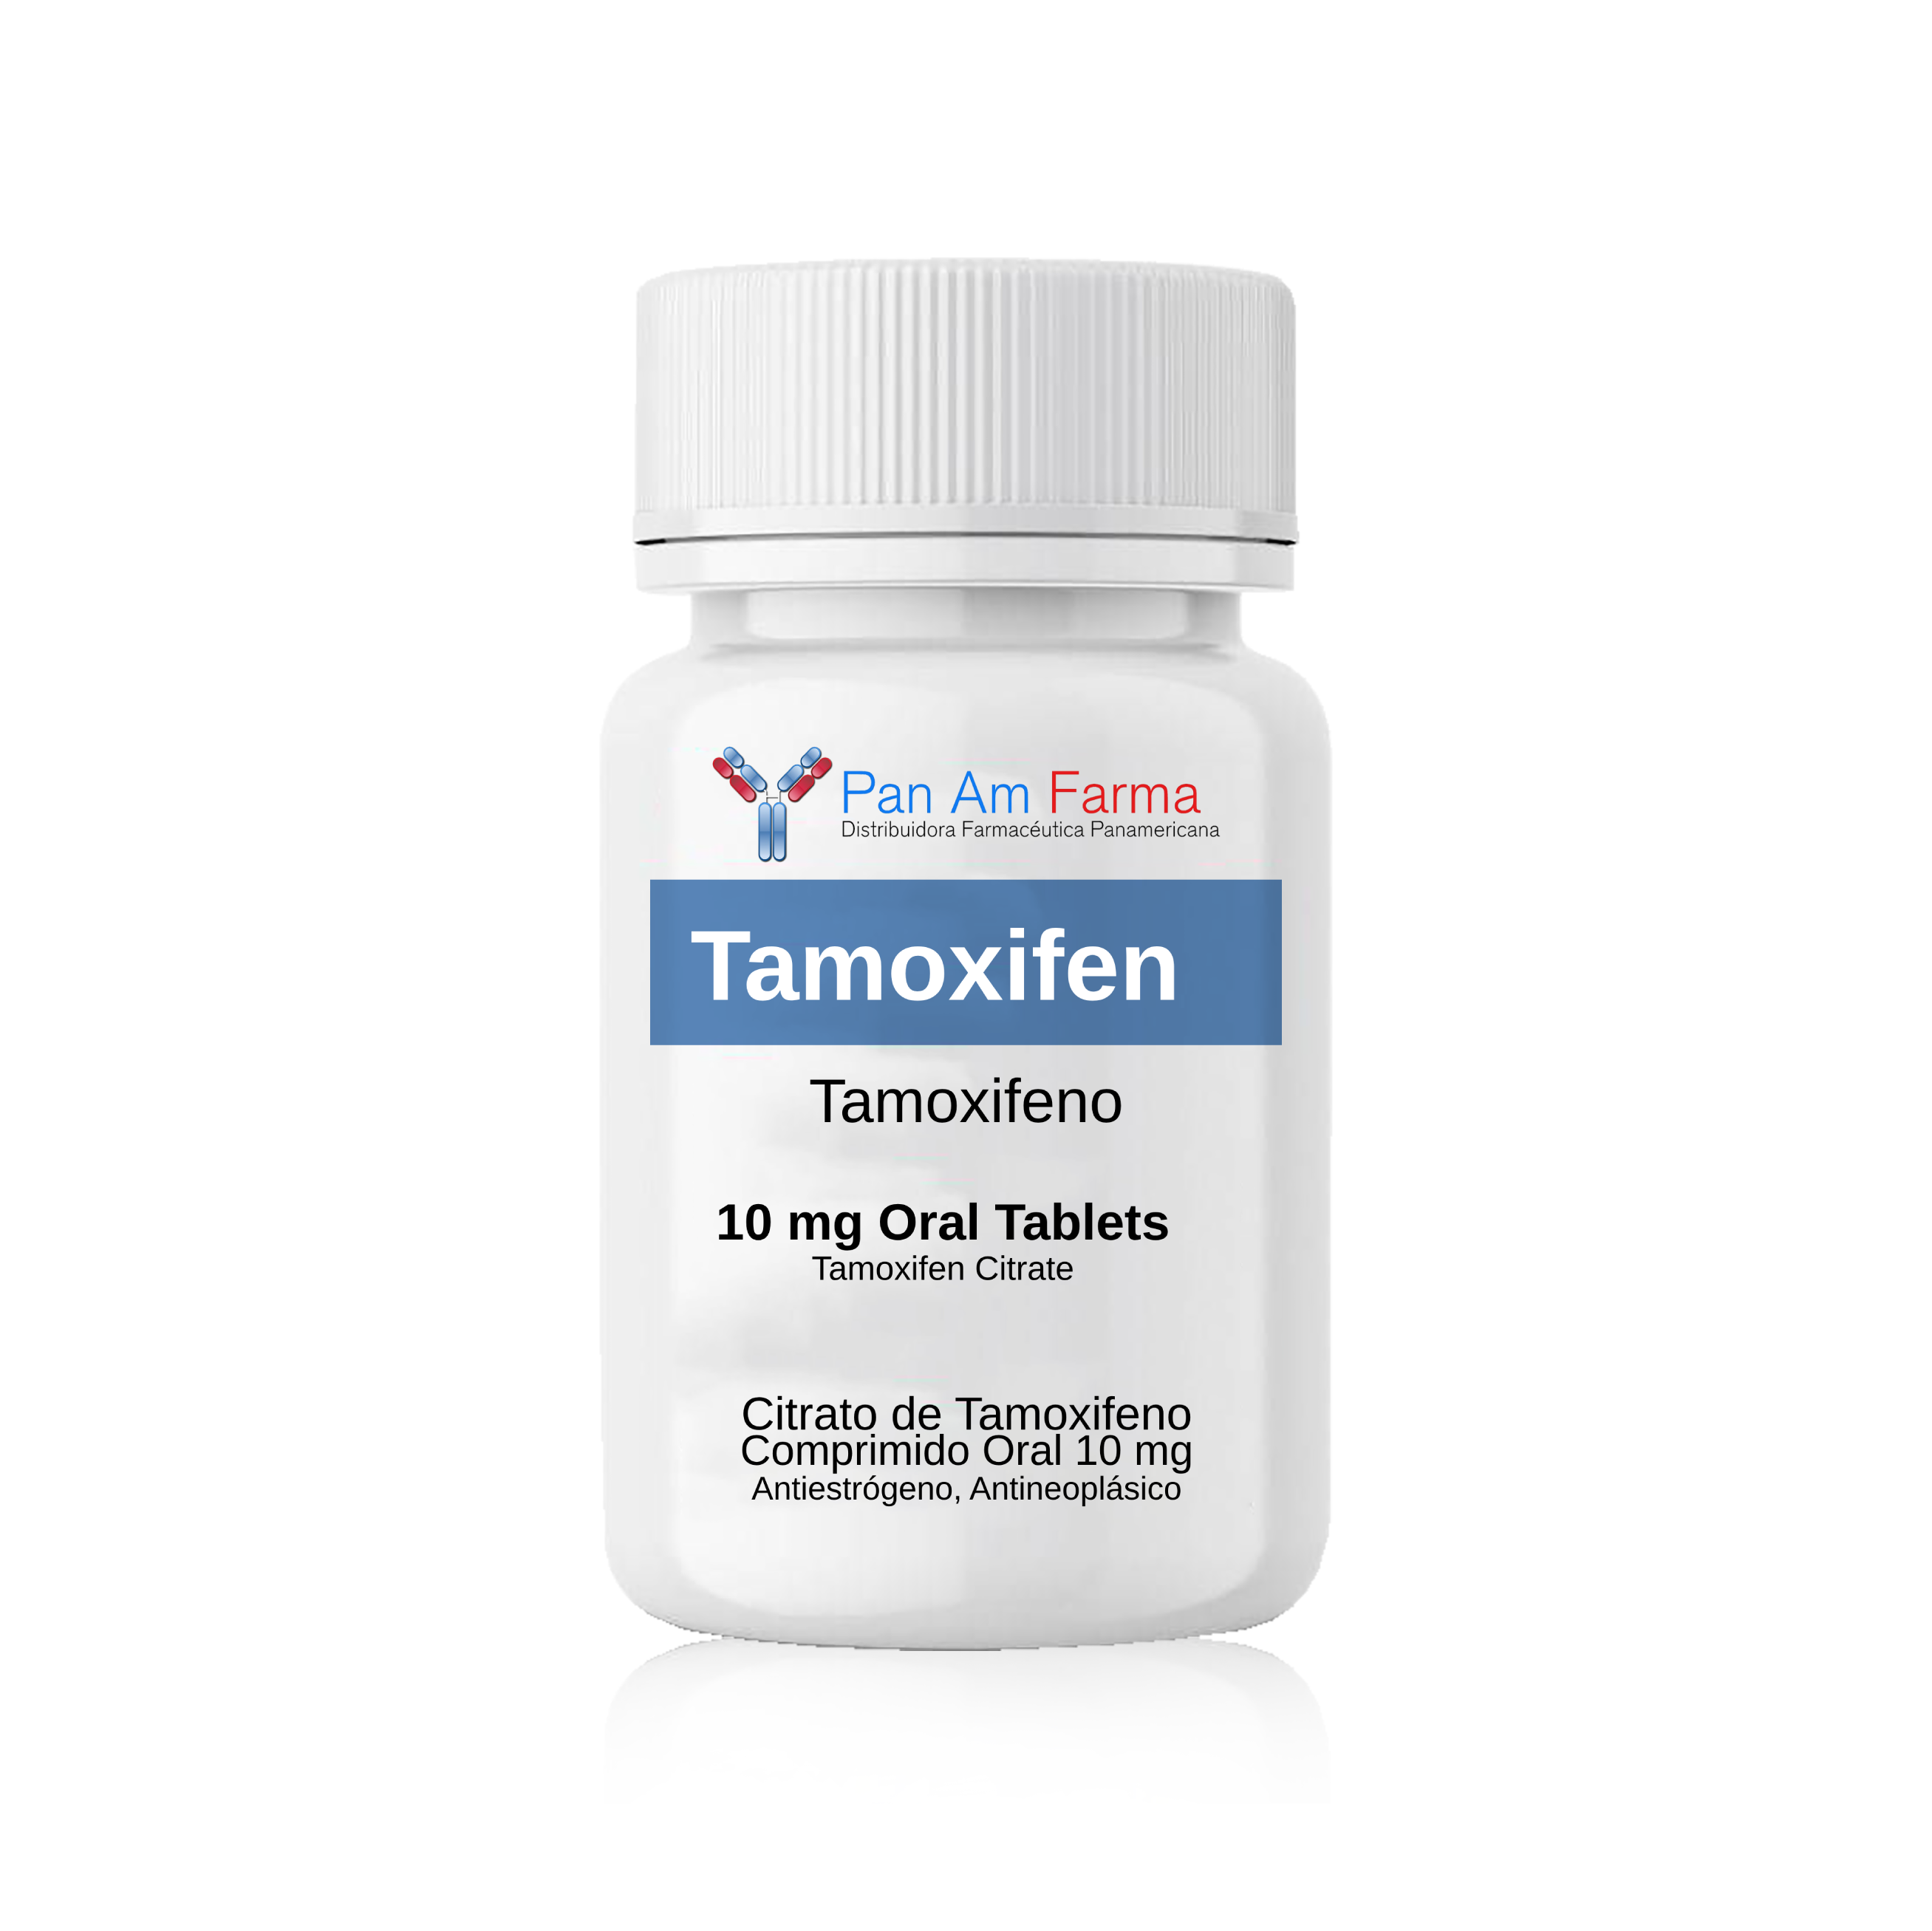 Tamoxifen / Tamoxifeno